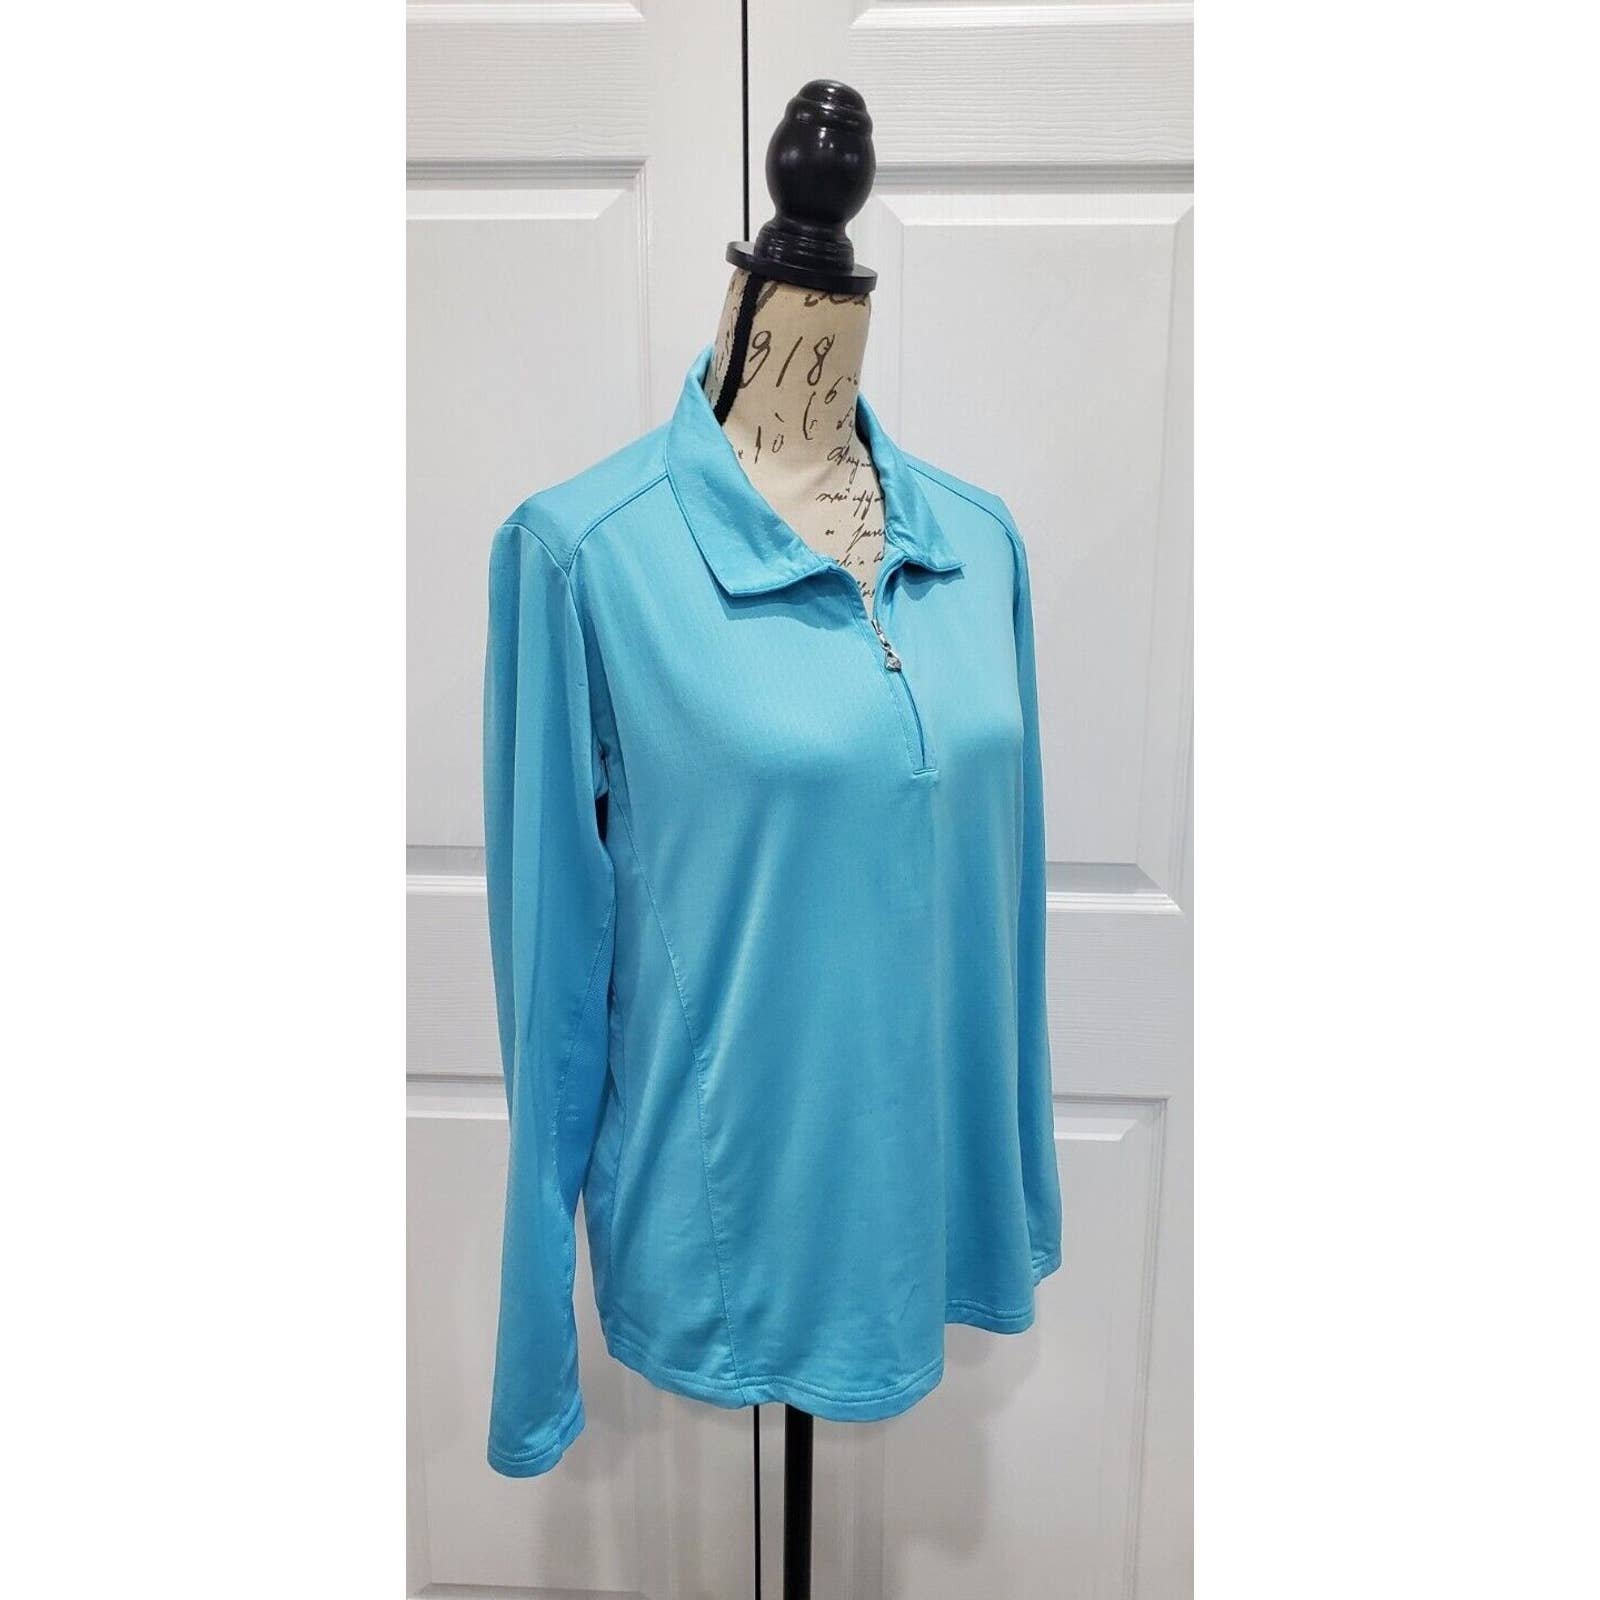 Popular SAN SOLEIL Blue 1/2 Zip UPF50+ Shirt Top Mesh Sleeve Panels Size Large pMtARL54c Buying Cheap